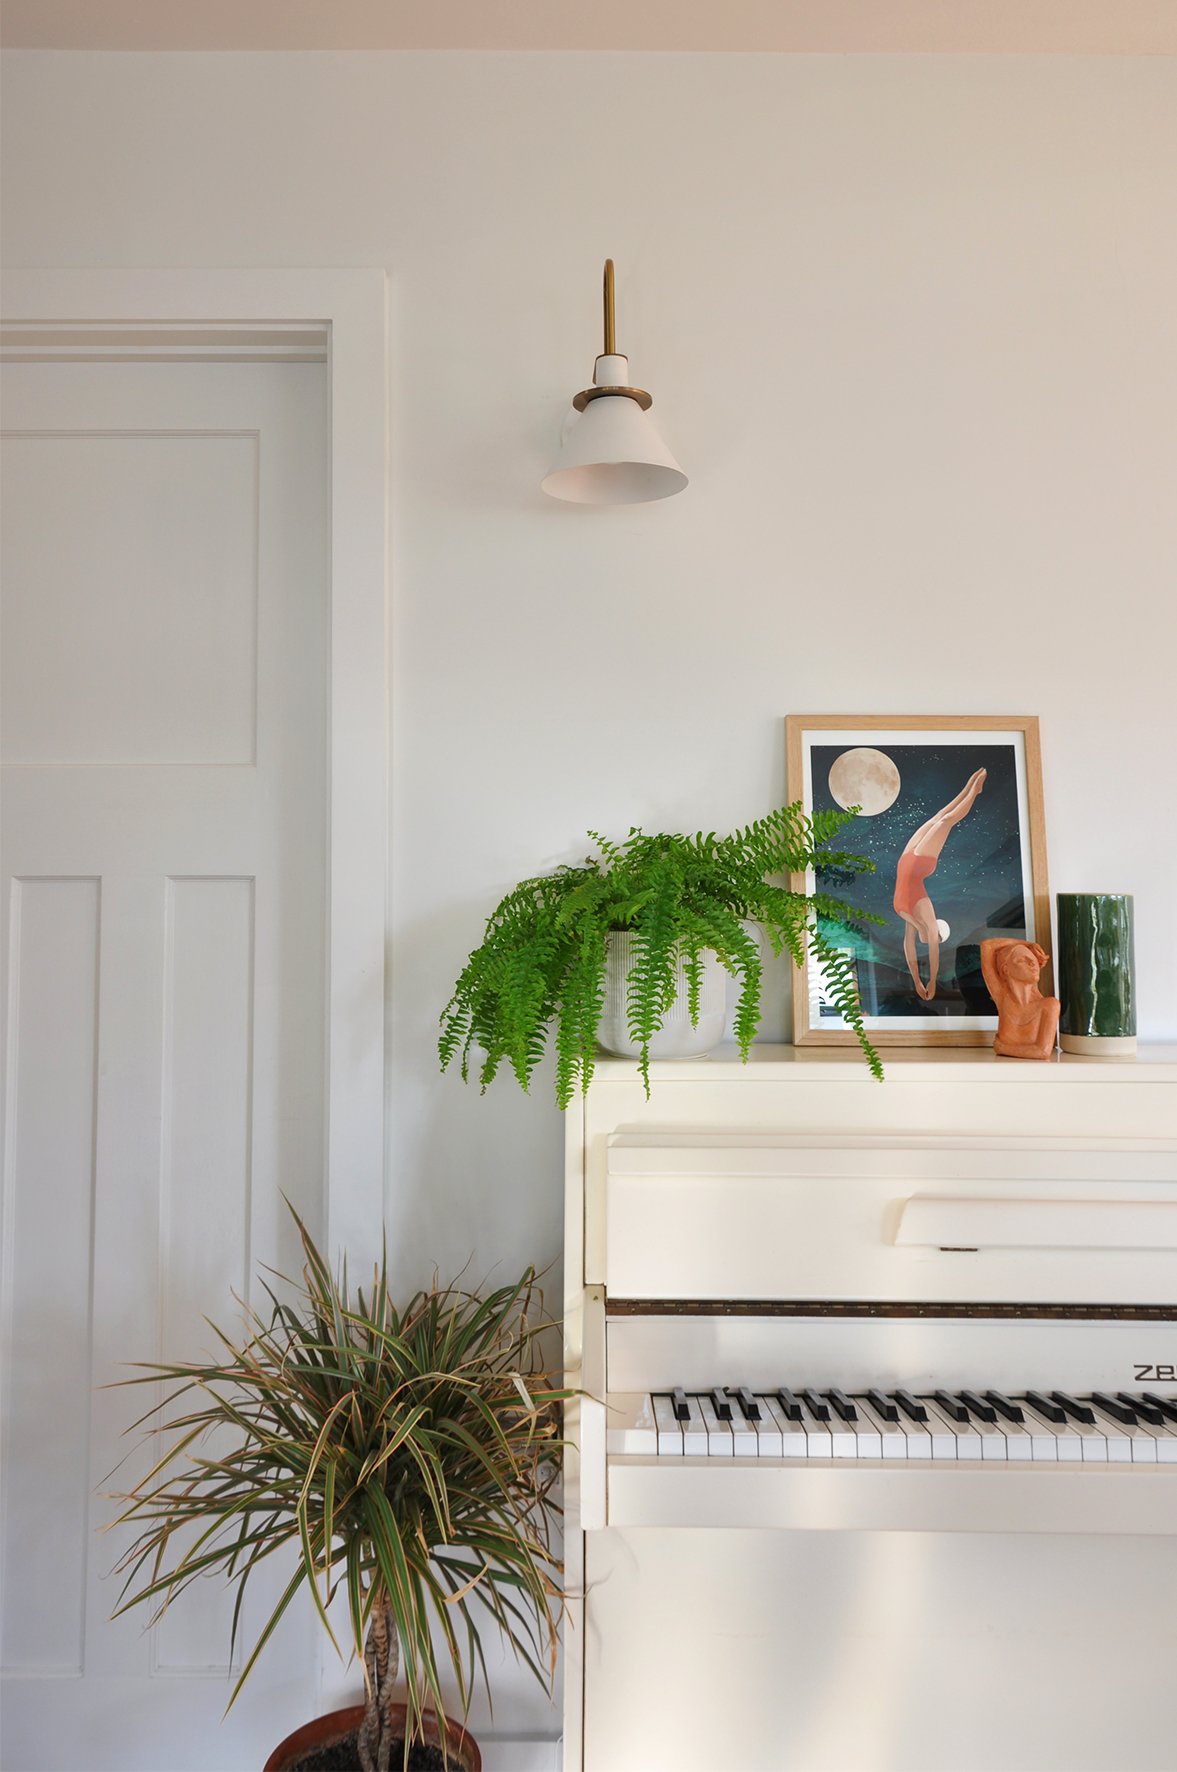 CharlotteBucciero-interiors-cream-piano-art-walllight-houseplant.jpg